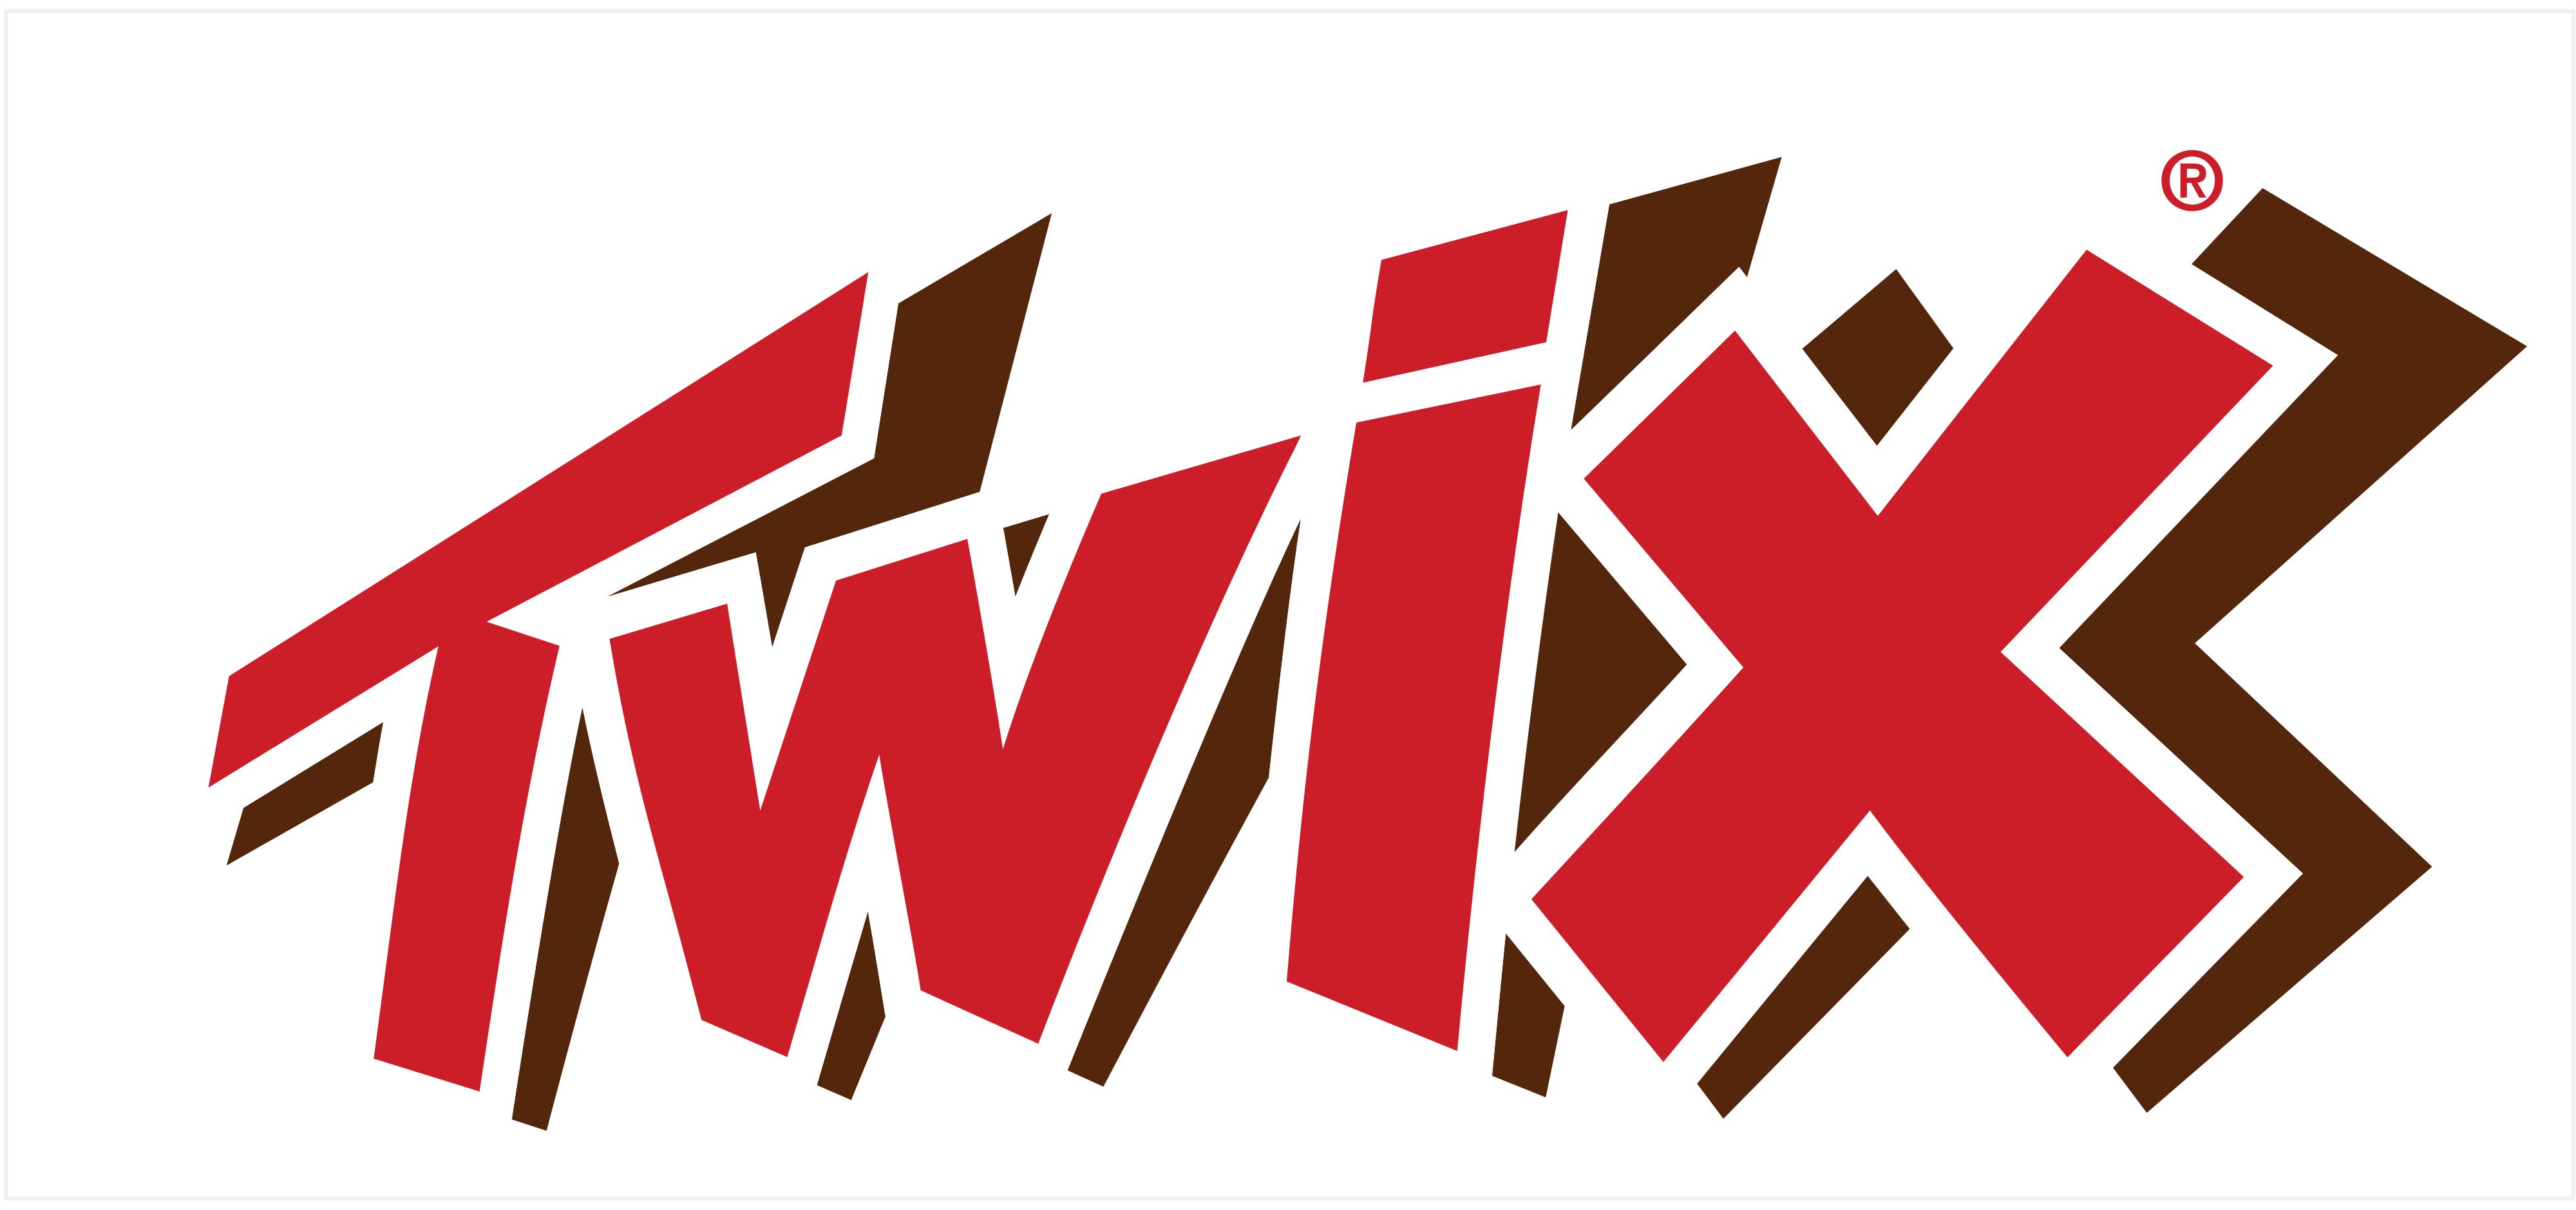 Twix logo - download.